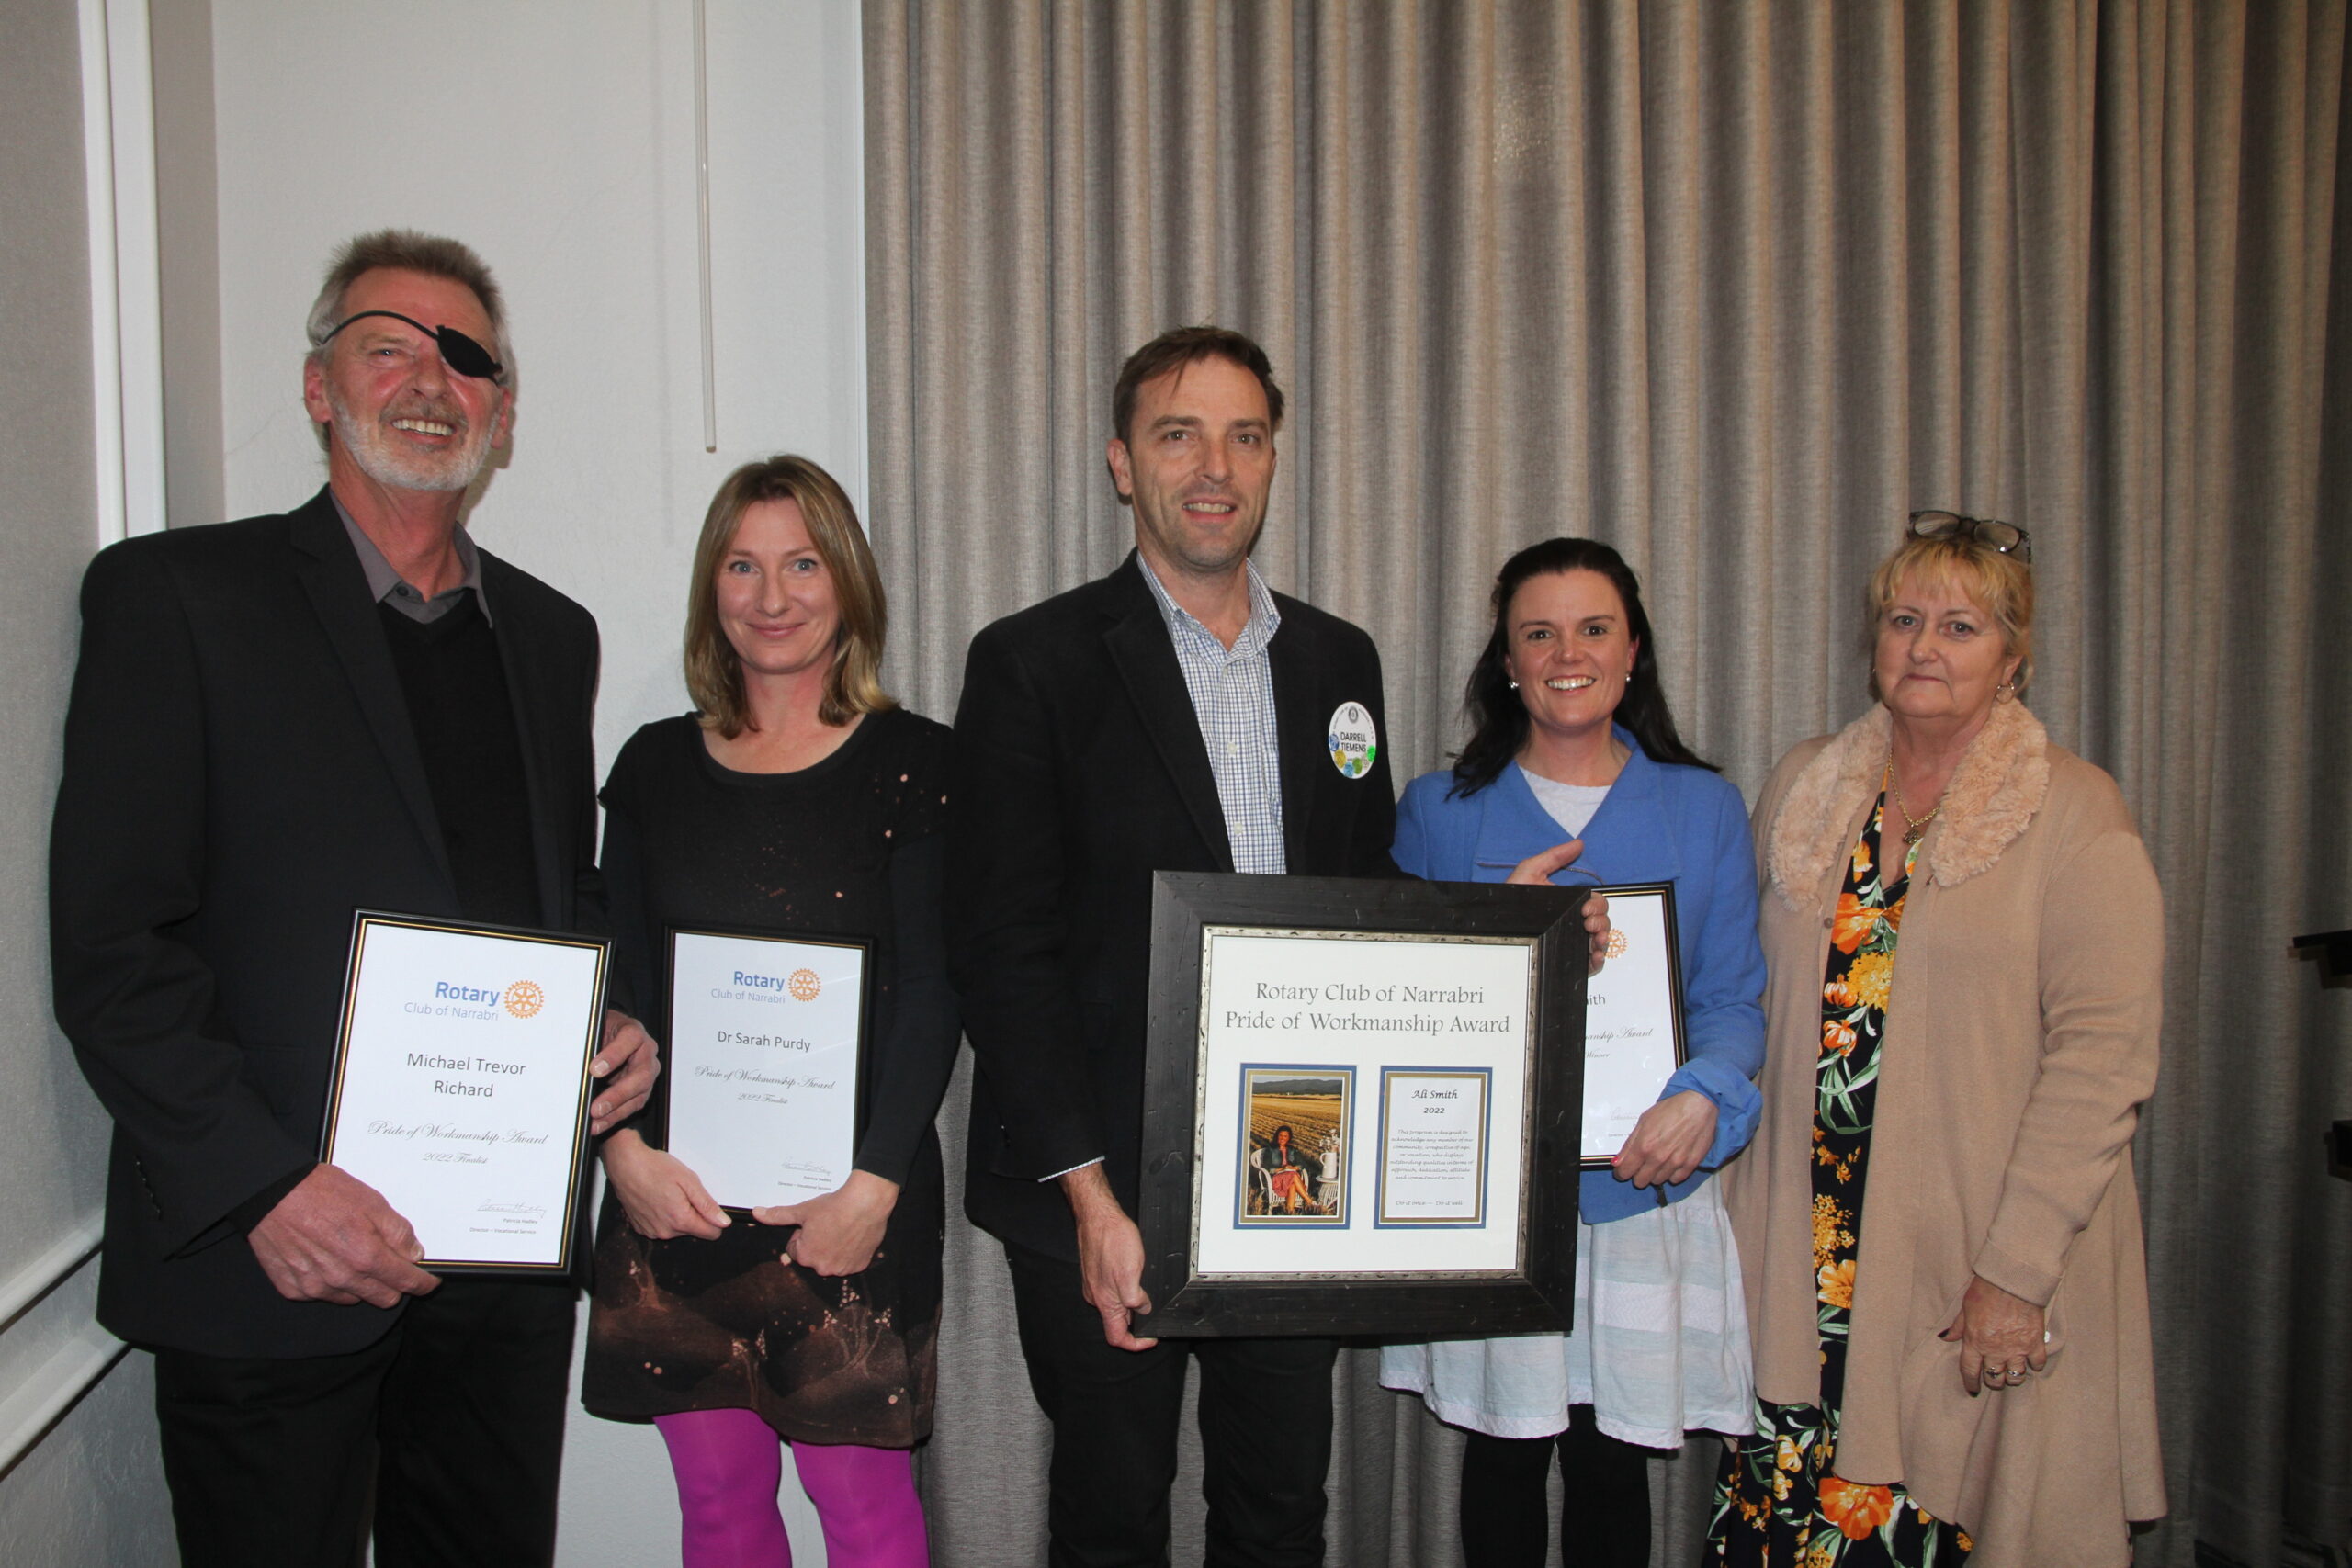 Ali Smith presented Rotary Club of Narrabri’s Pride of Workmanship Award